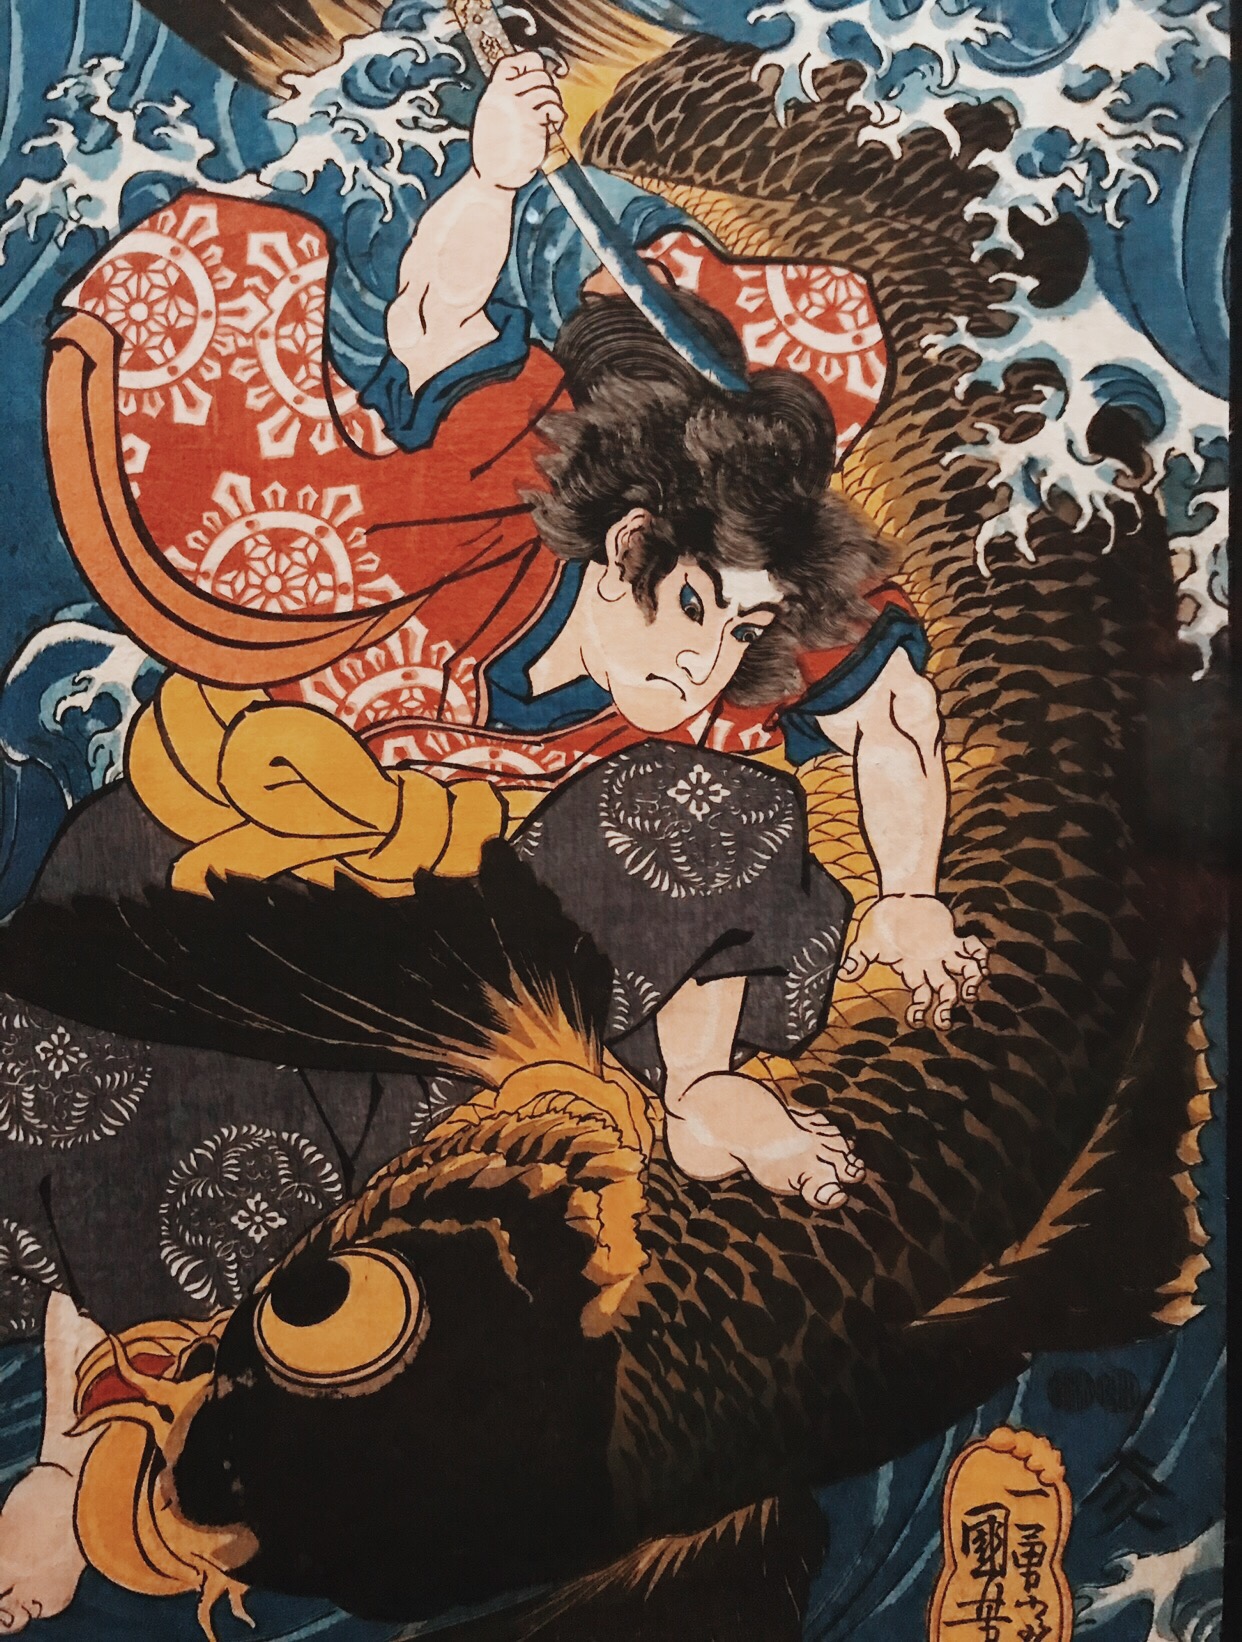 Kuniyoshi anima pop dell’ottocento, al Museo della Permanente